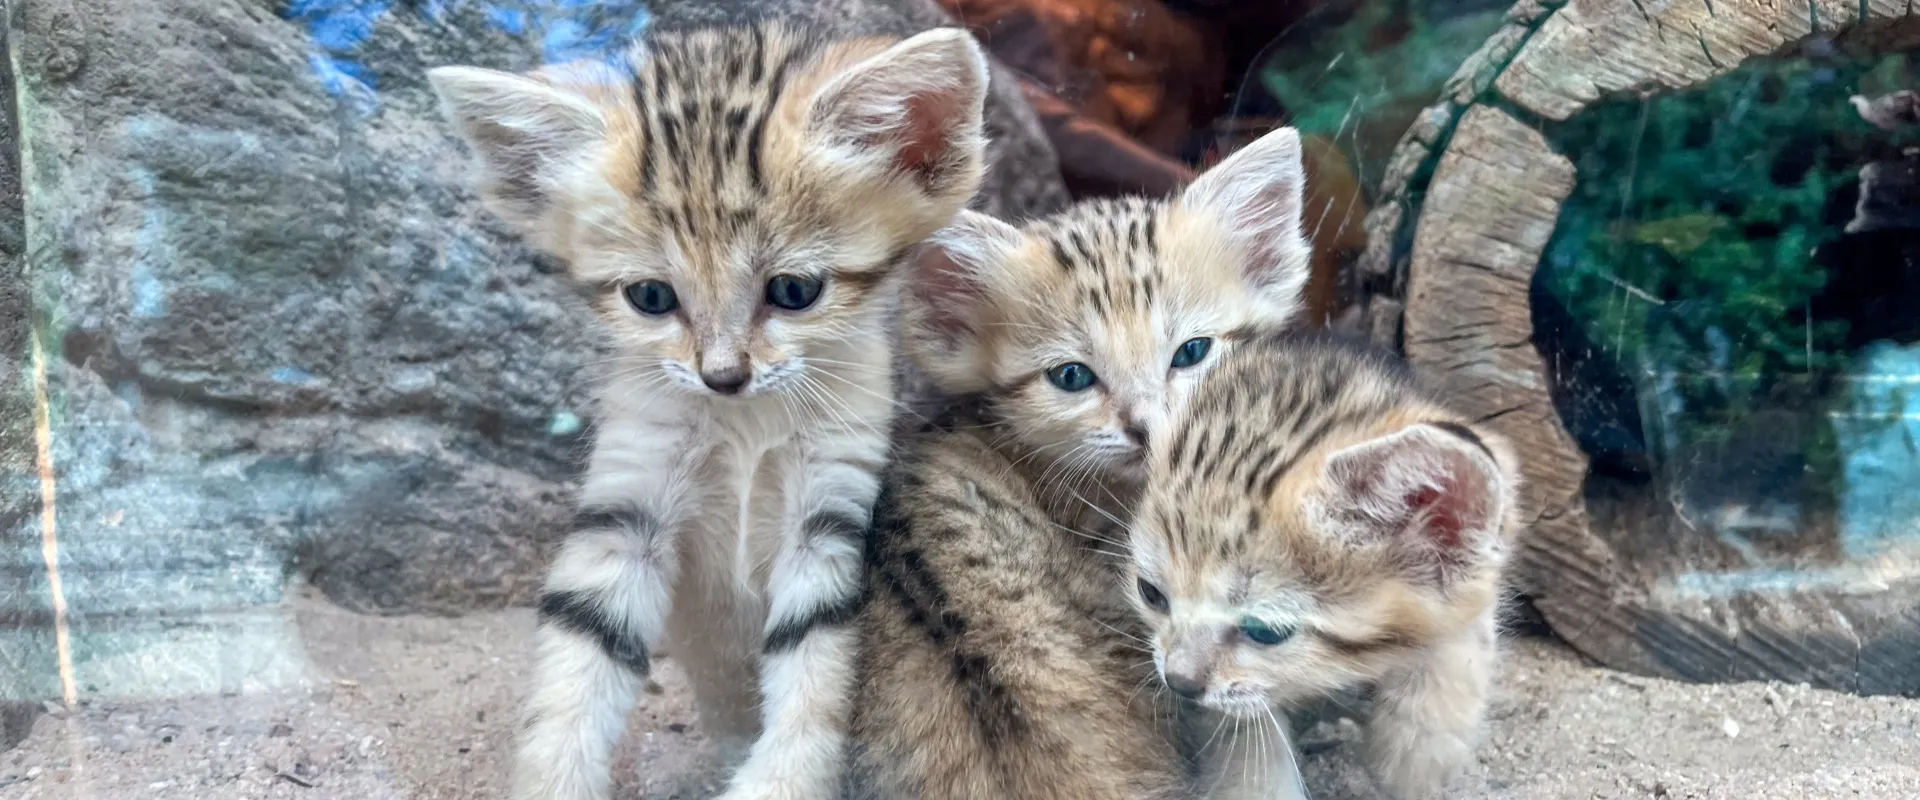 North Carolina Zoo Announces Sand Kitten Names Chosen by the Public